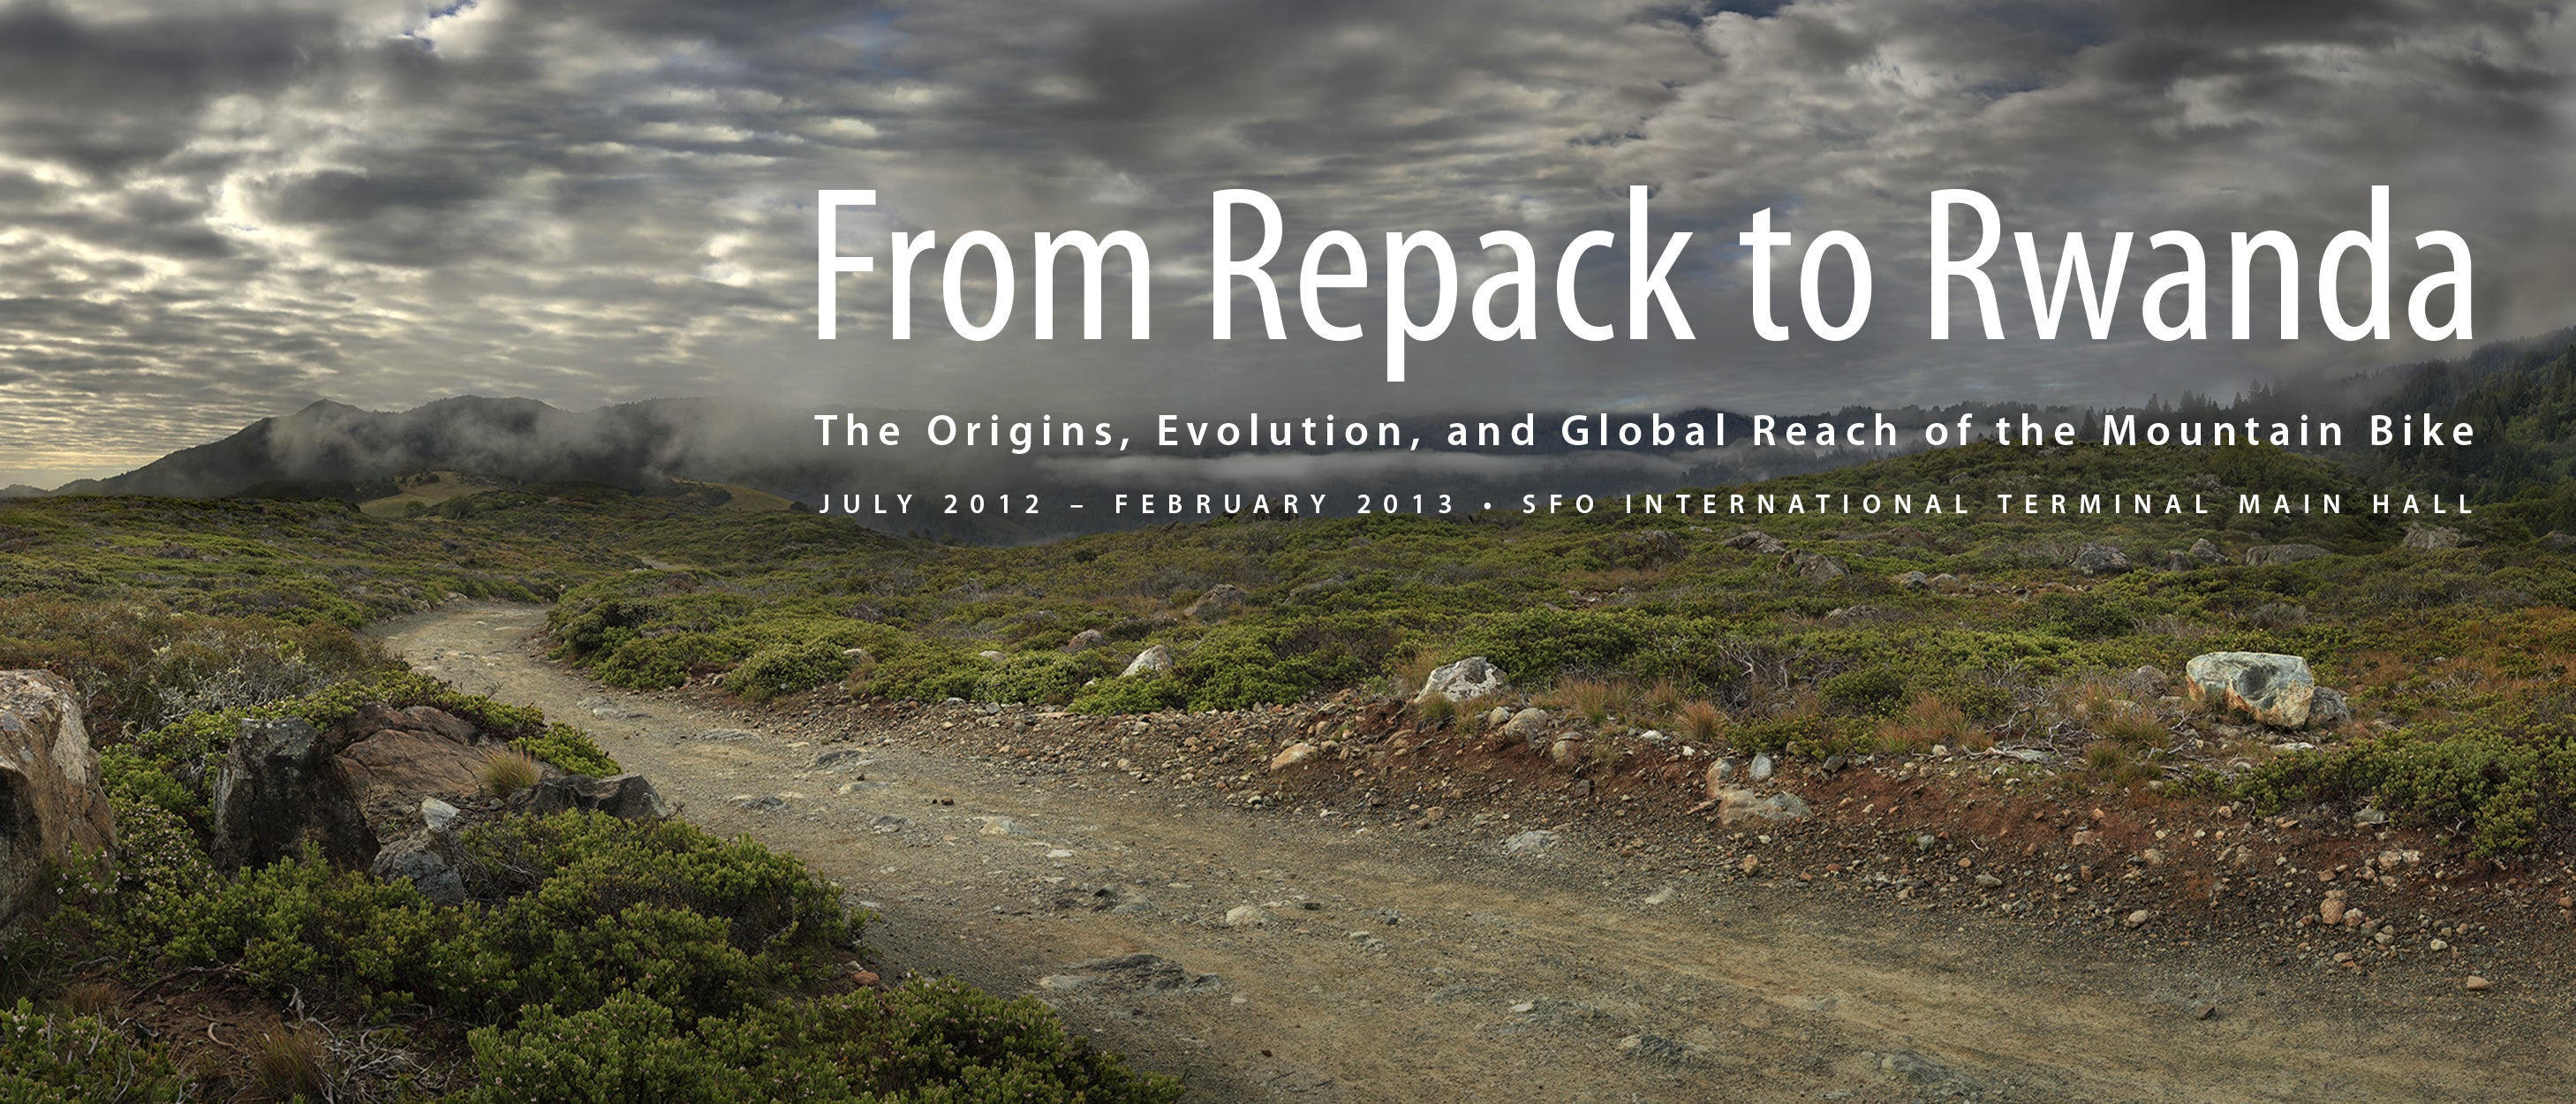 From Repack to Rwanda: The Origins, Evolution, and Global Reach of the Mountain Bike 